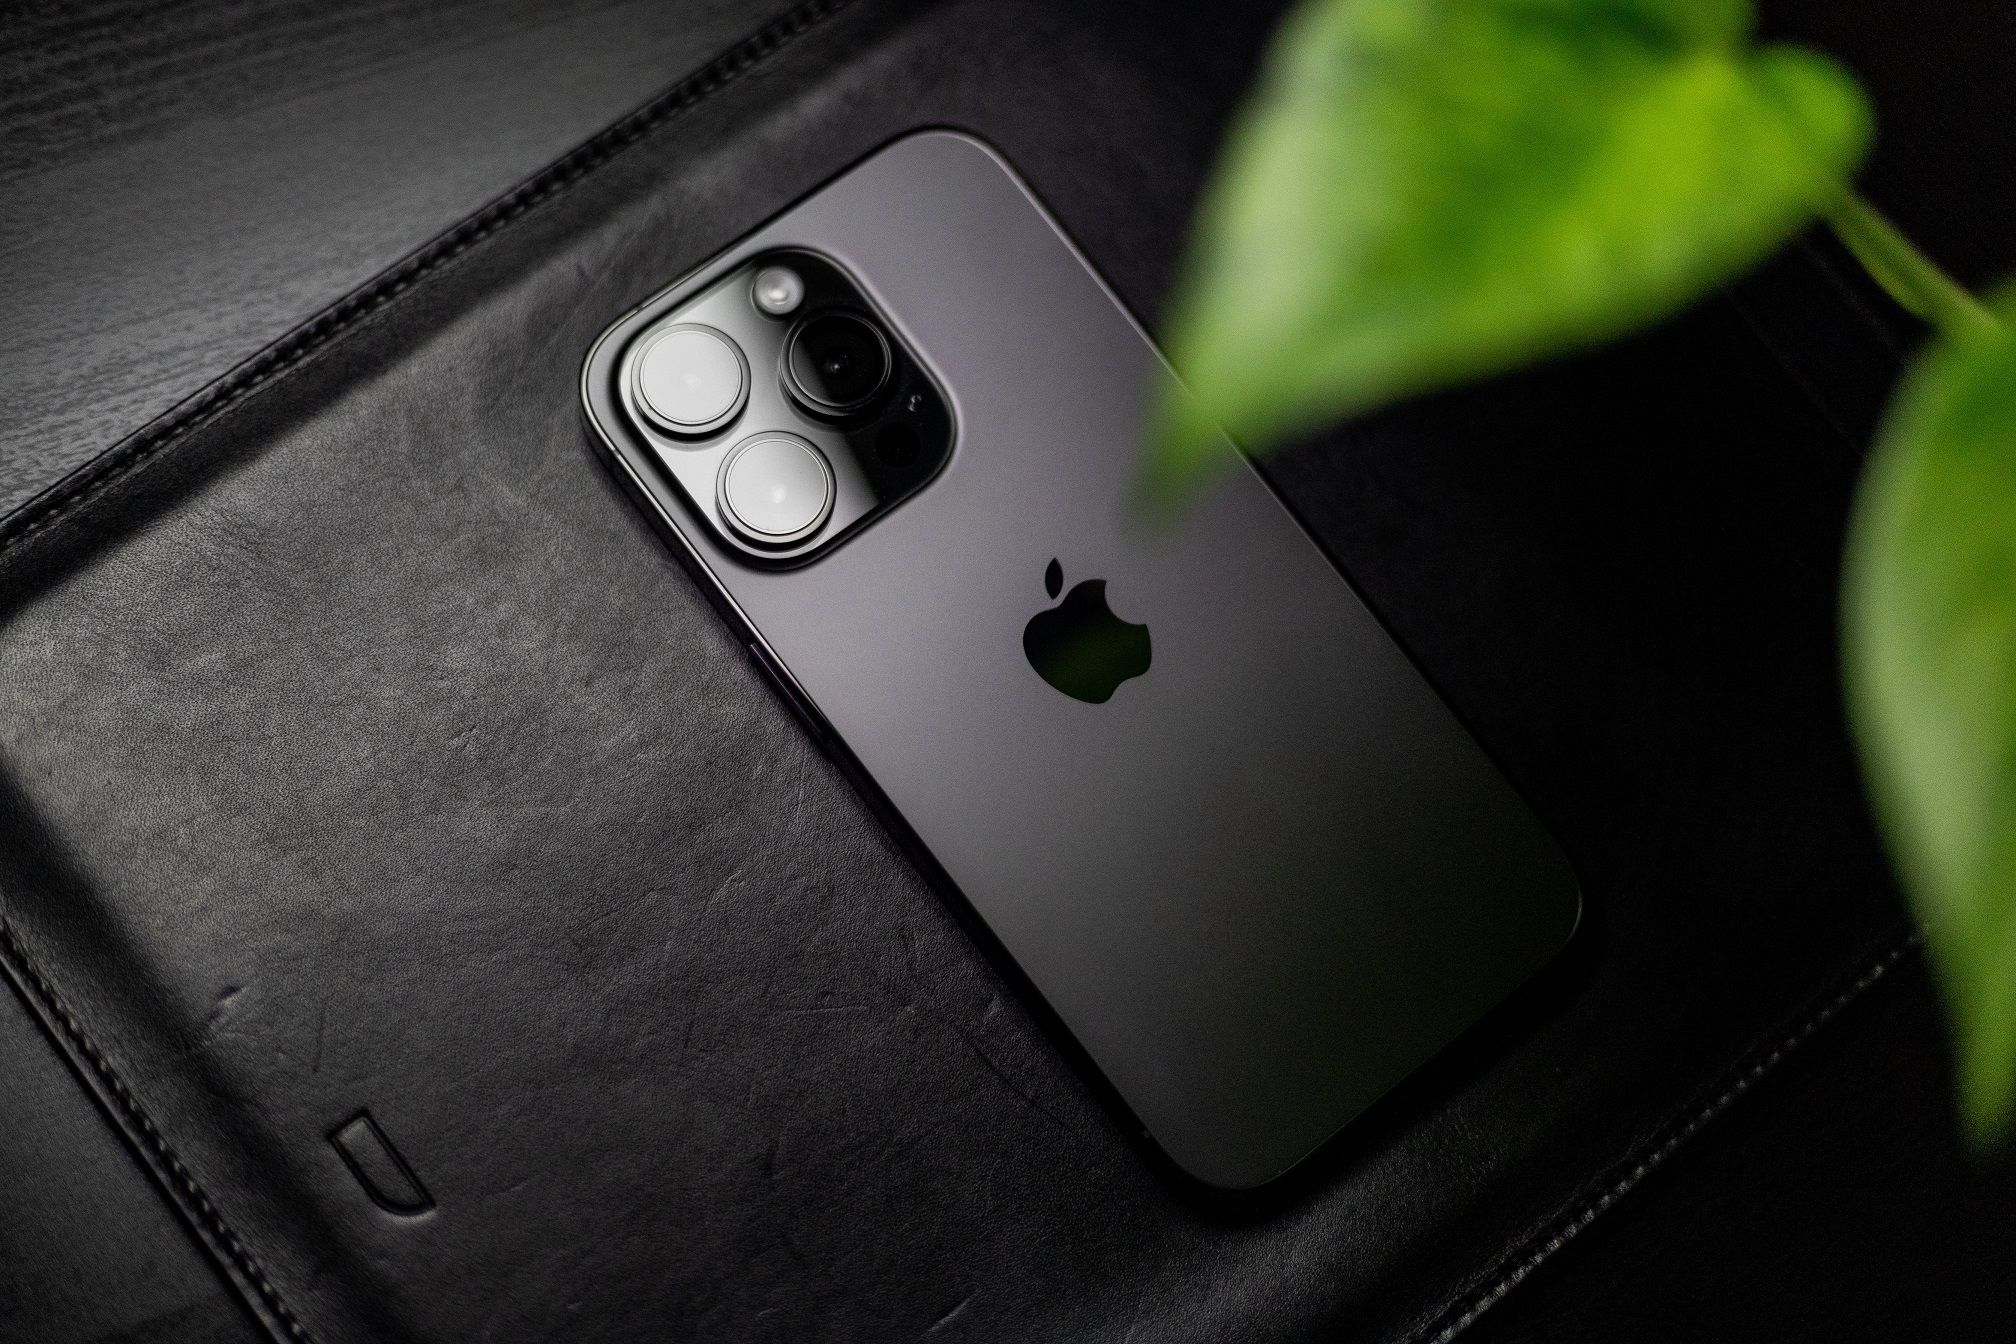 Harga iPhone 14 Pro Max Masuki Desember 2022 Ternyata Segini, Cek di Sini Info Selengkapnya!